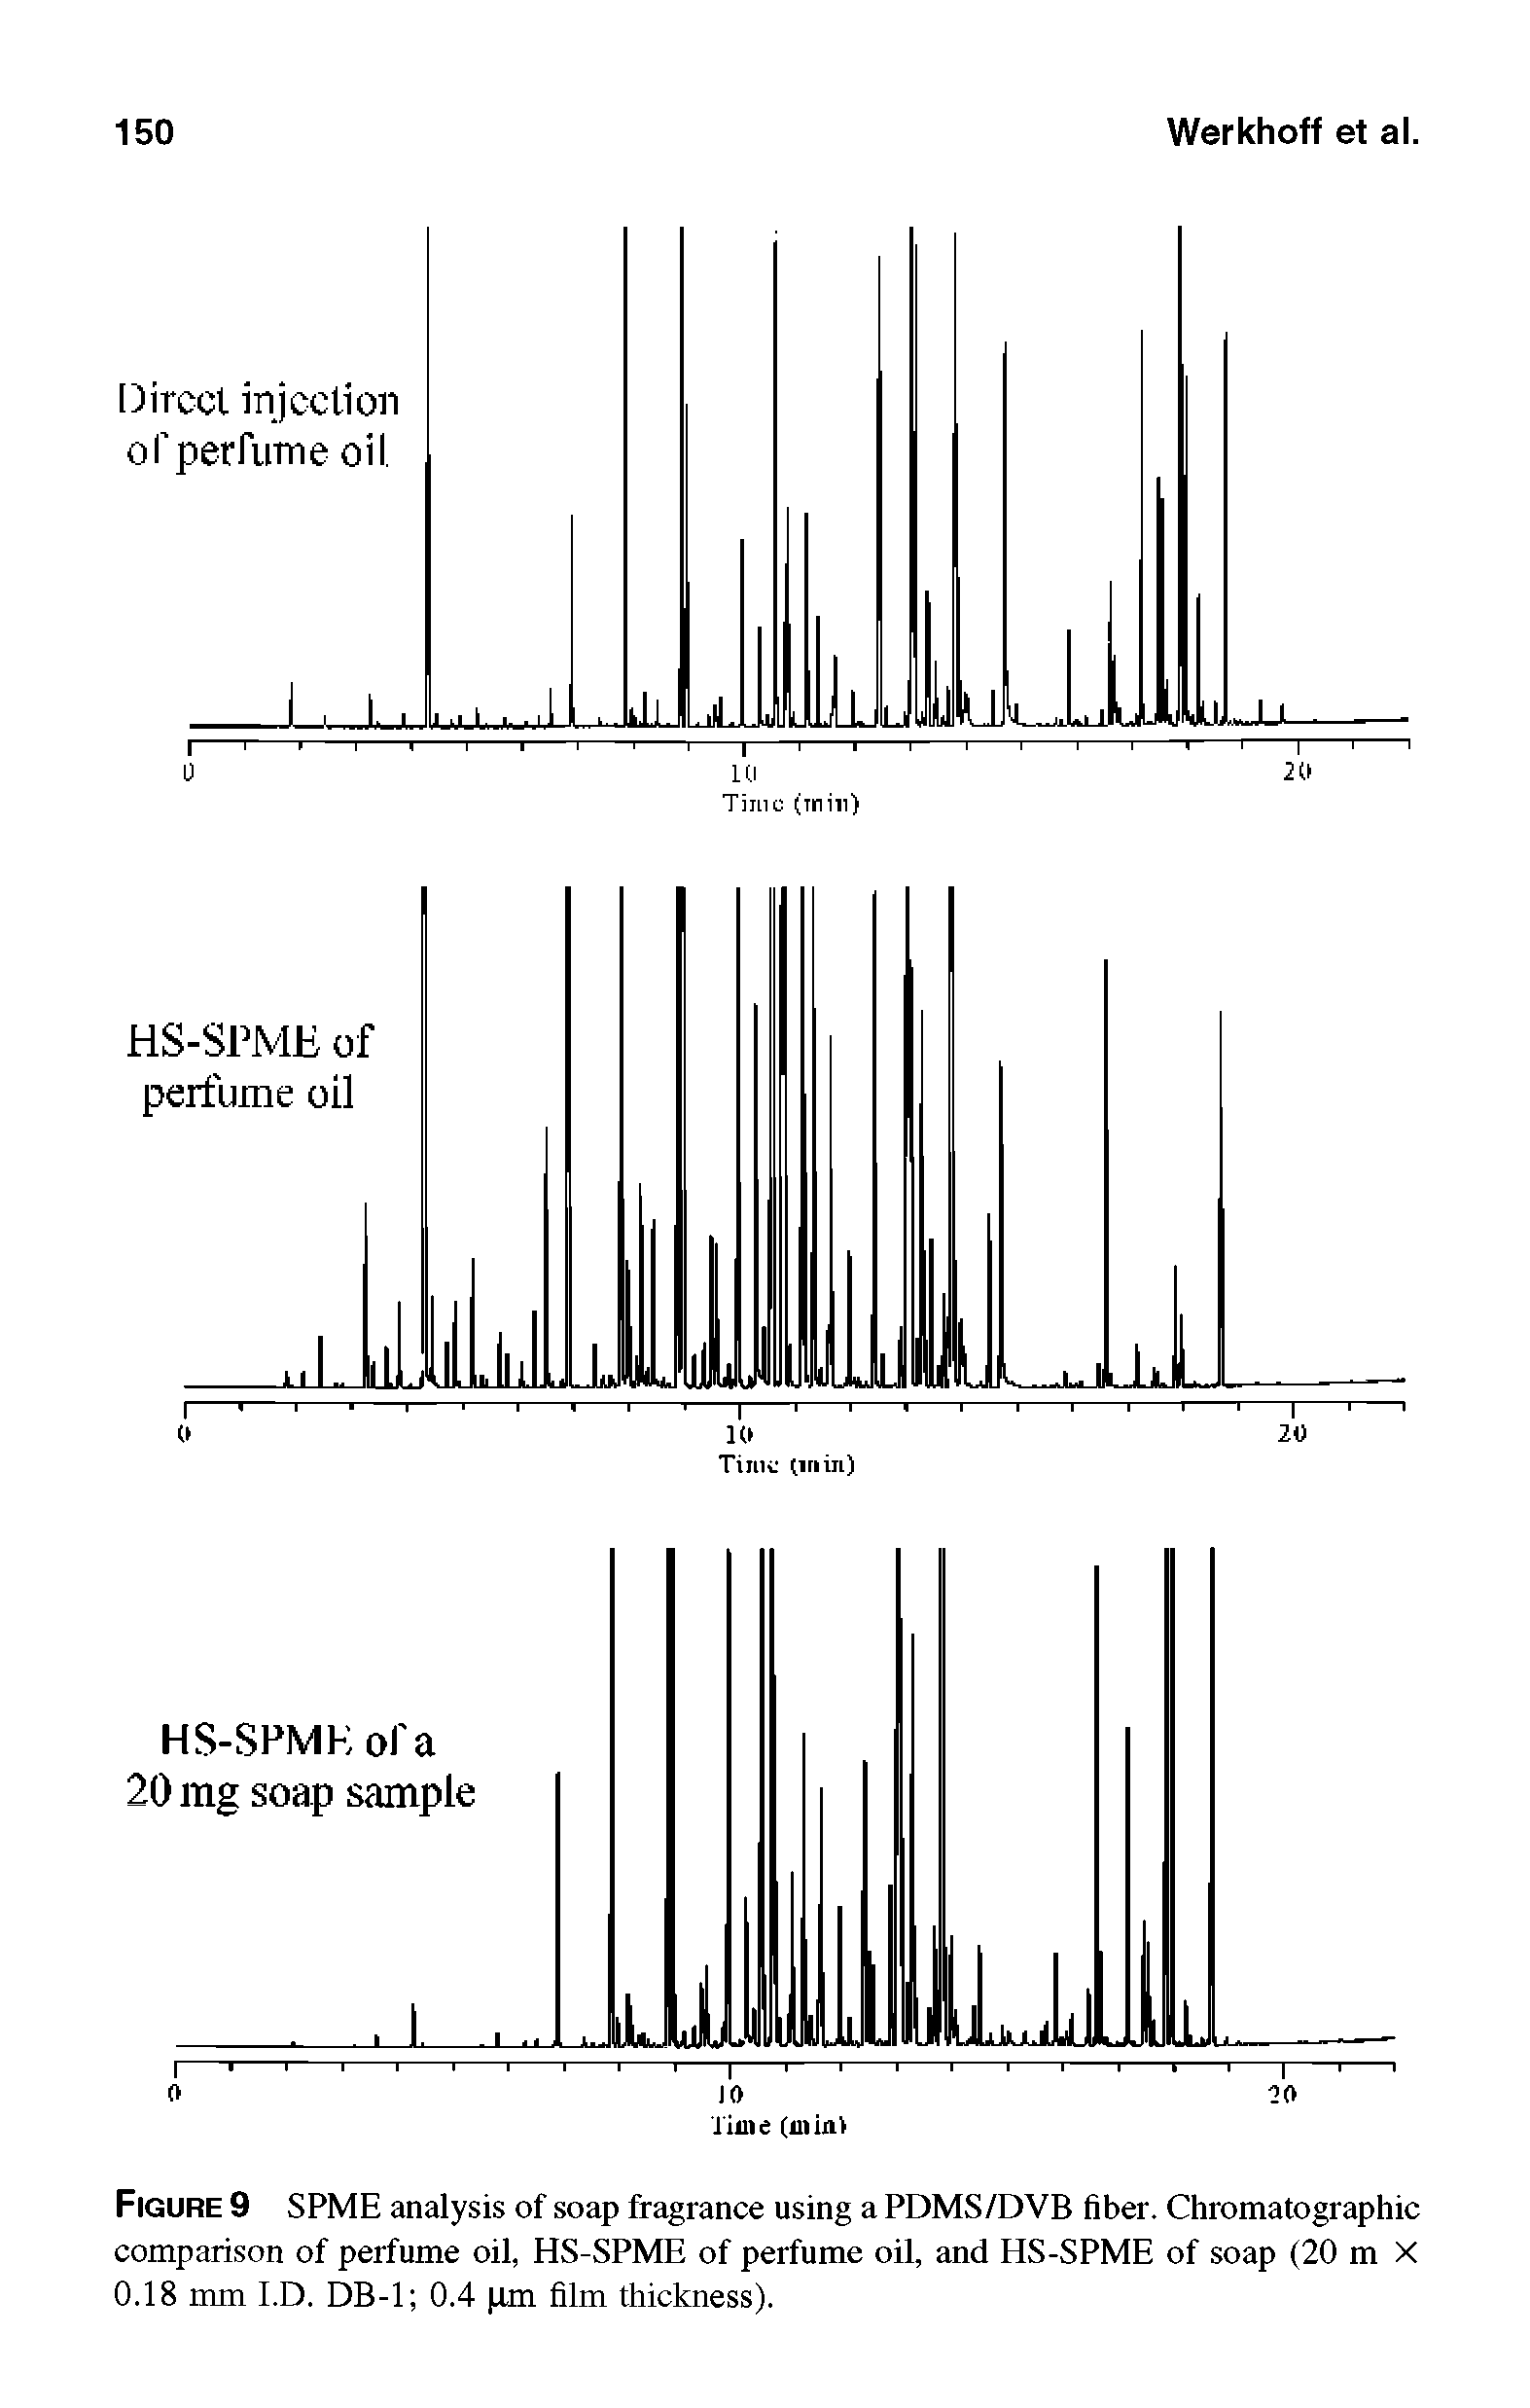 Figure 9 SPME analysis of soap fragrance using a PDMS/DVB fiber. Chromatographic comparison of perfume oil, HS-SPME of perfume oil, and HS-SPME of soap (20 m X 0.18 mm I.D. DB-1 0.4 im film thickness).